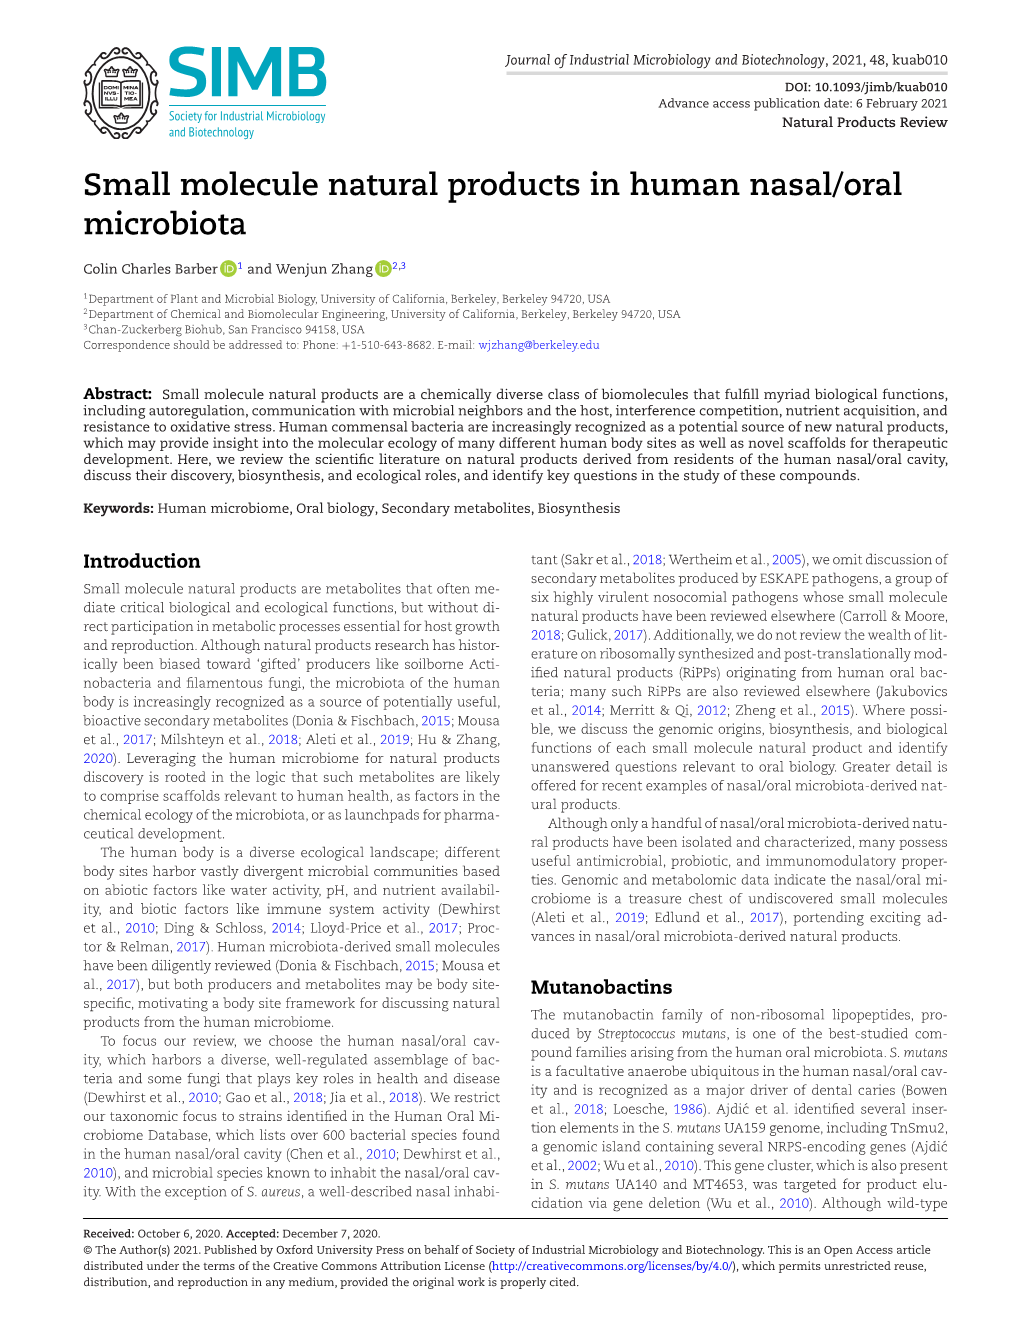 Small Molecule Natural Products in Human Nasal/Oral Microbiota